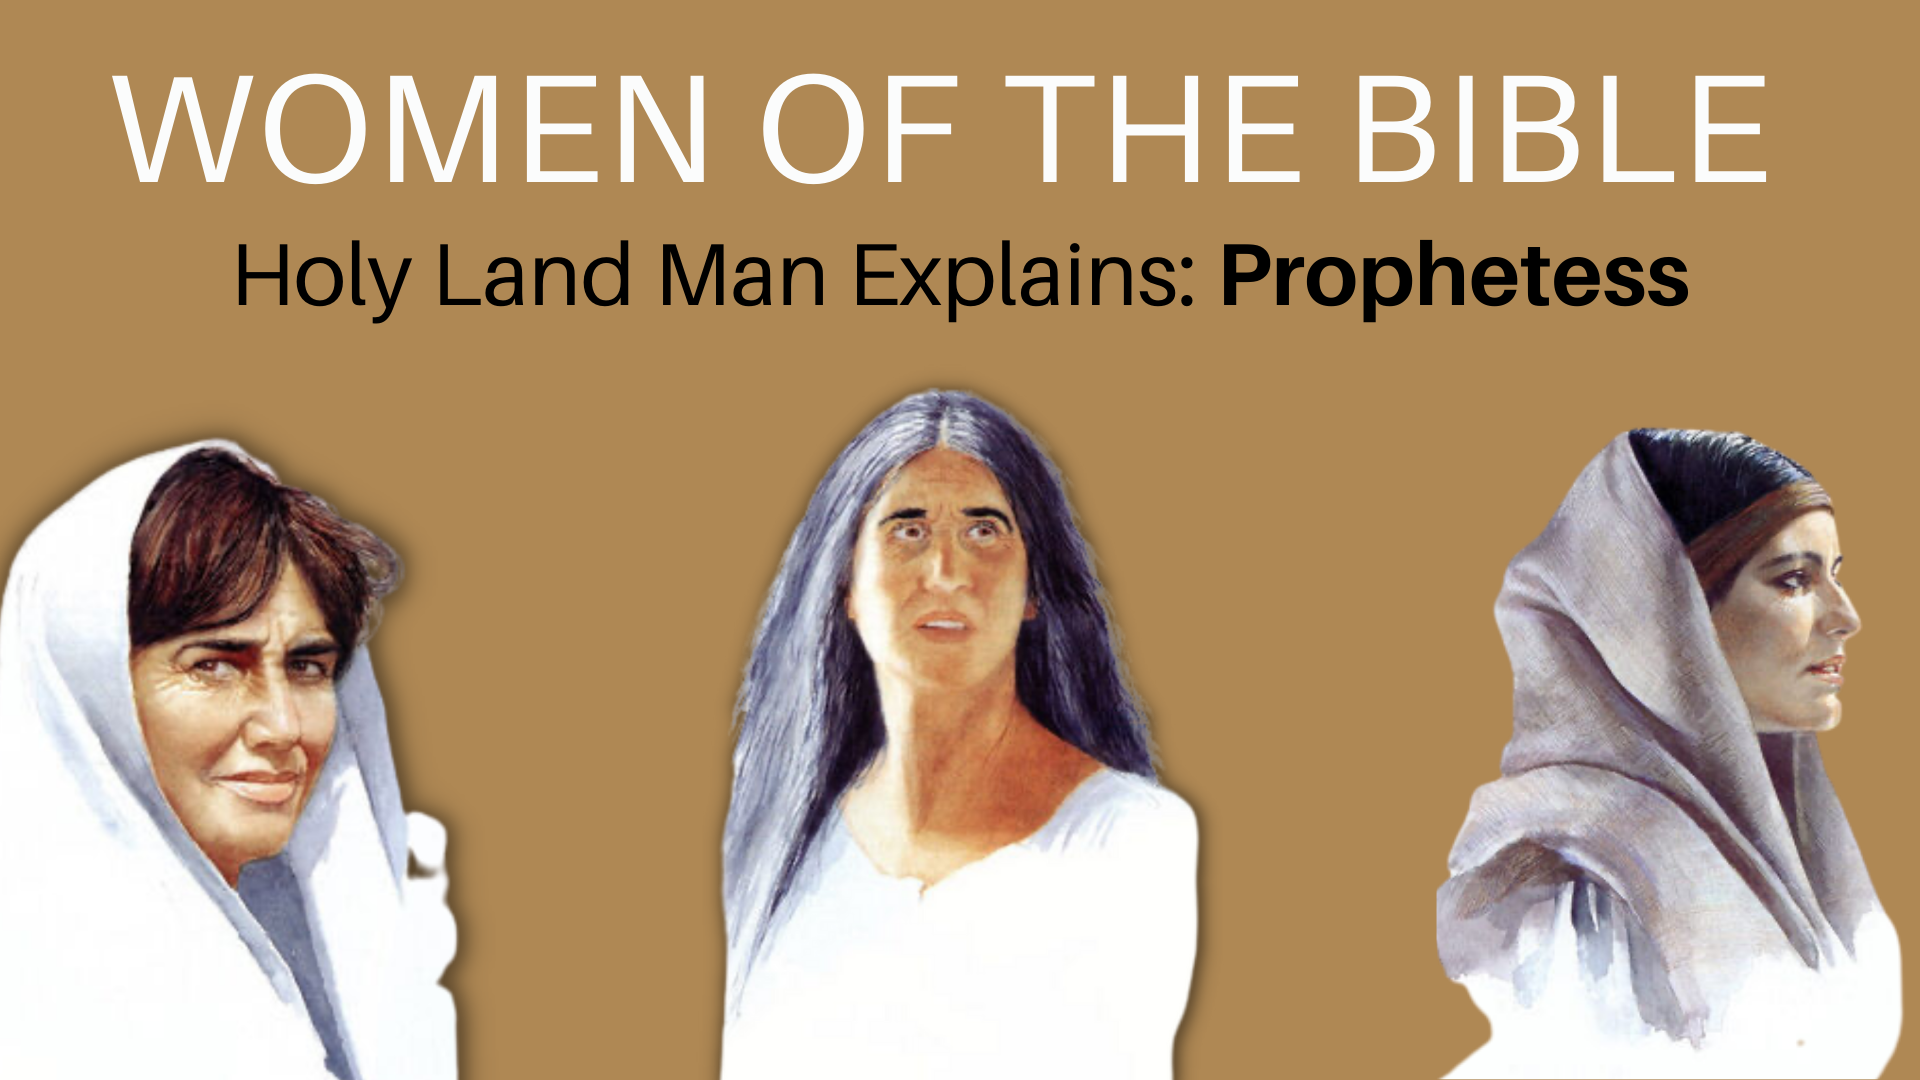 WOMEN AS PROPHETS “PROPHETESS”